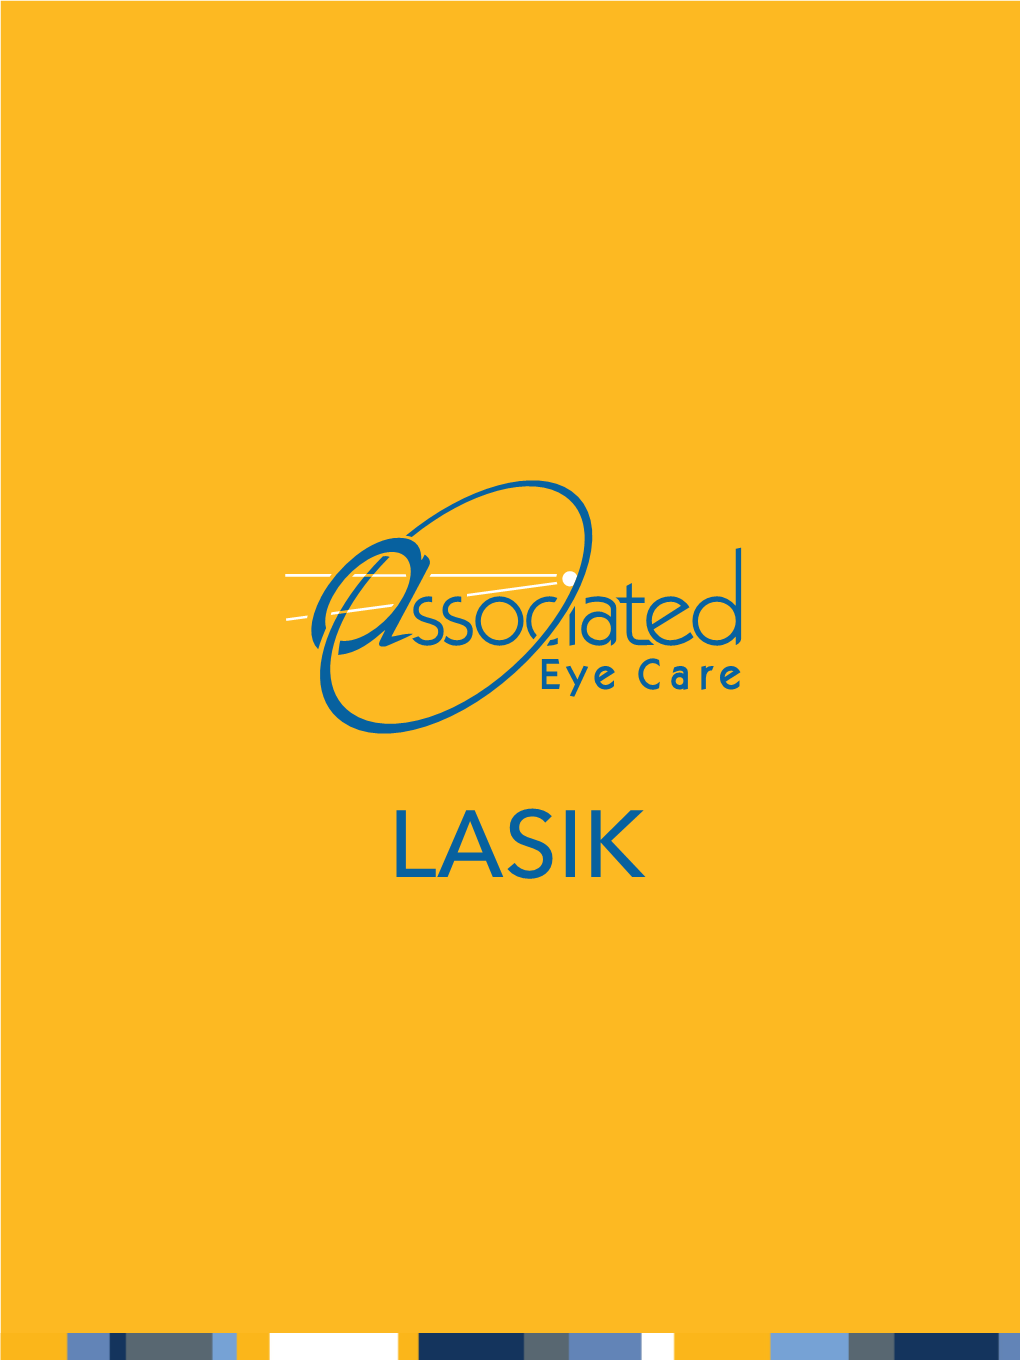 The Lasik Vision Advantage Program